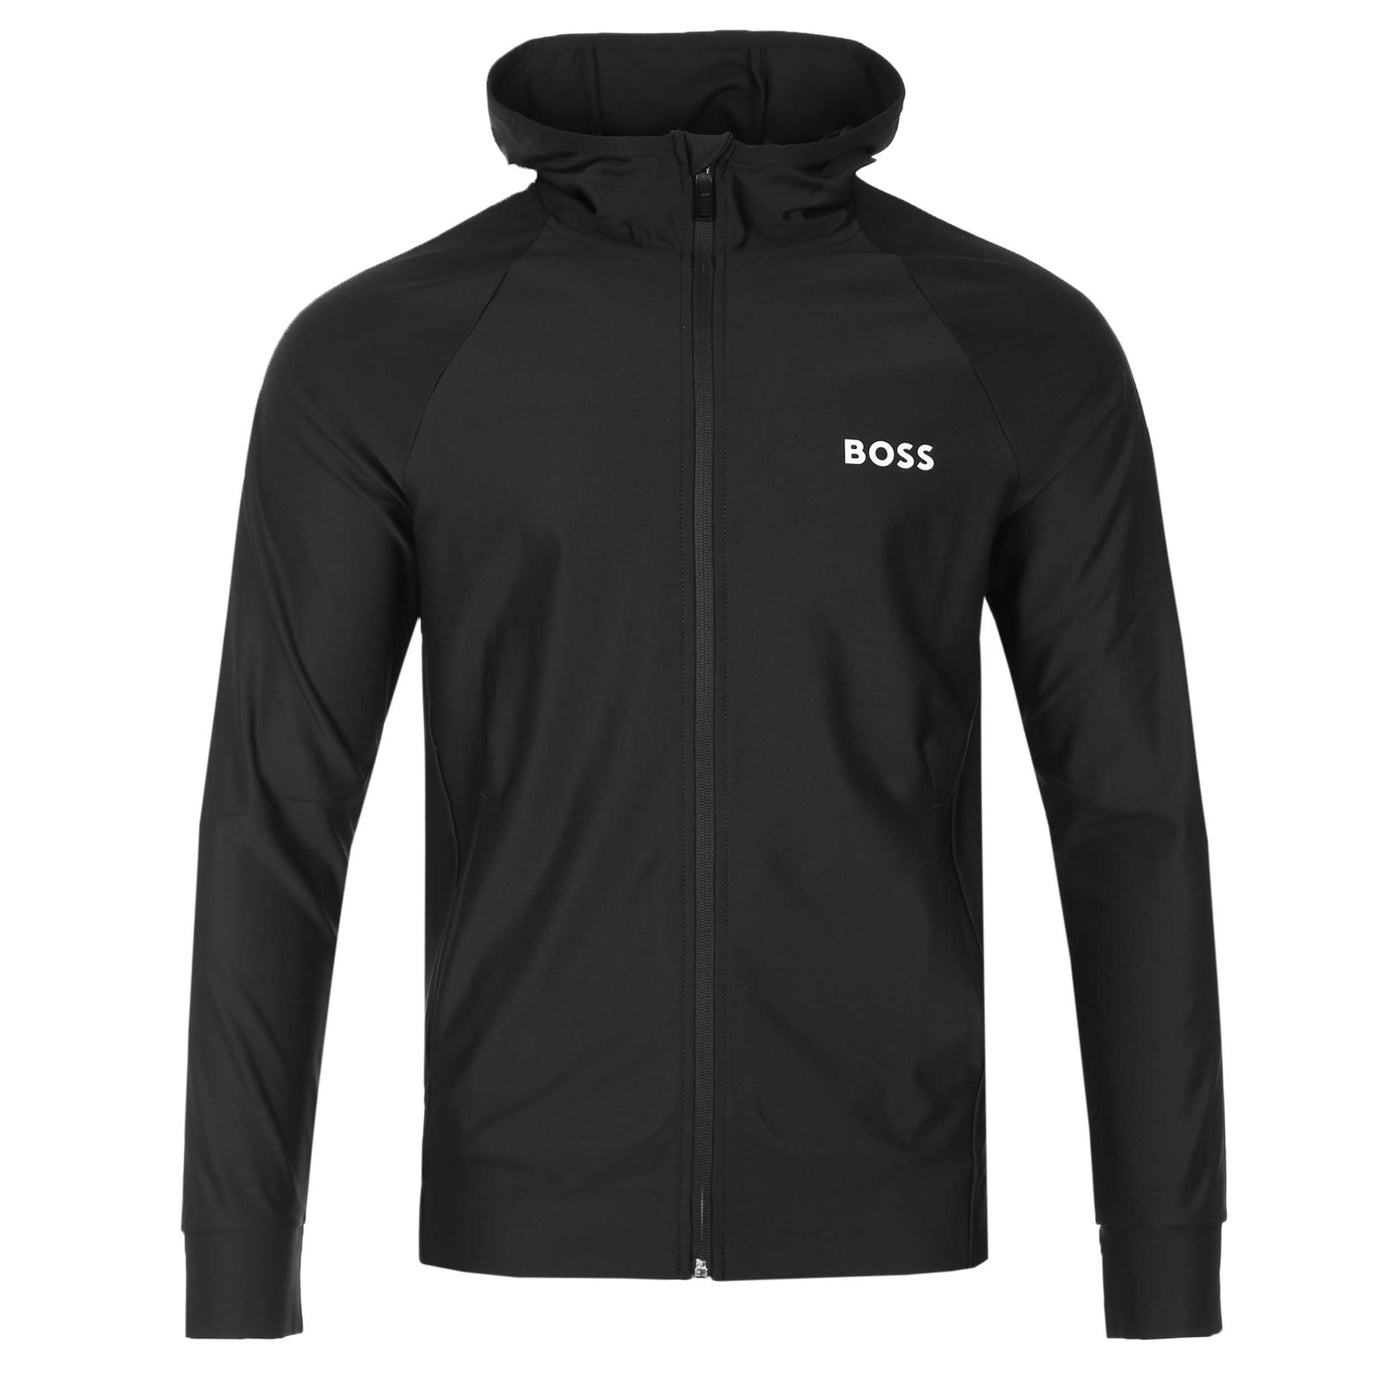 BOSS Sicon MB 2 Sweat Shirt in Black